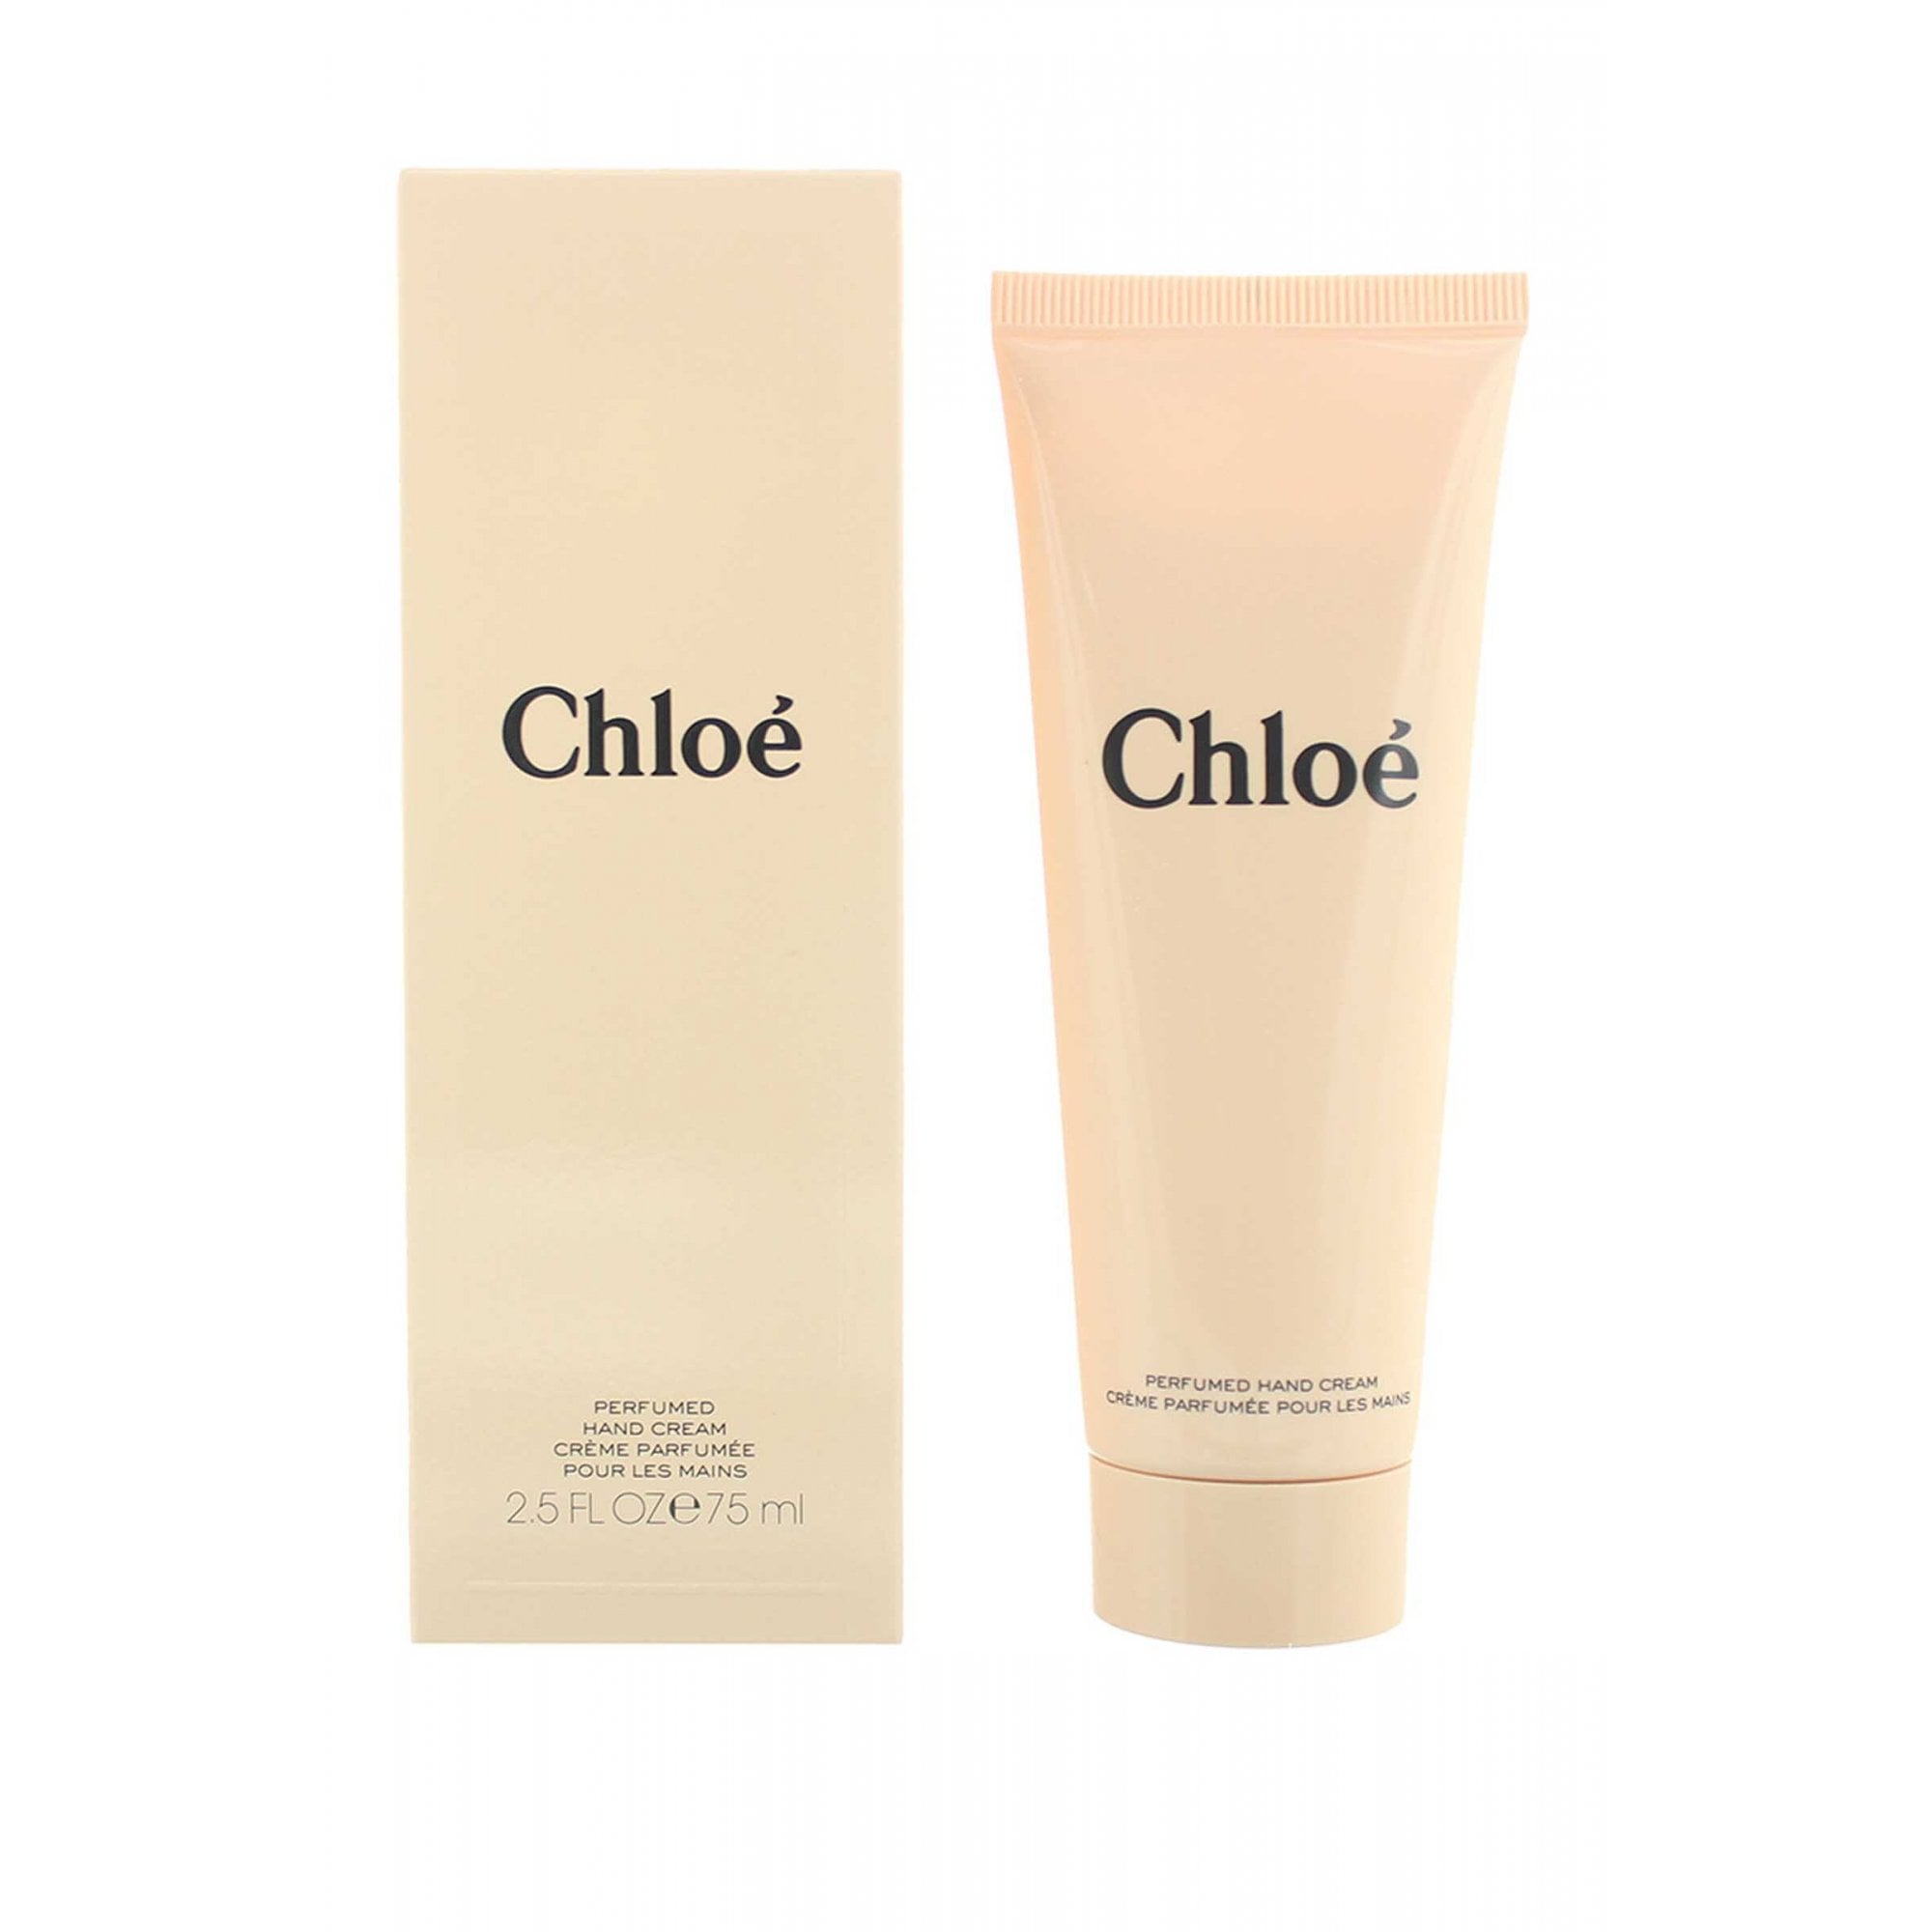 Chloe Hand Cream | My Perfume Shop Australia